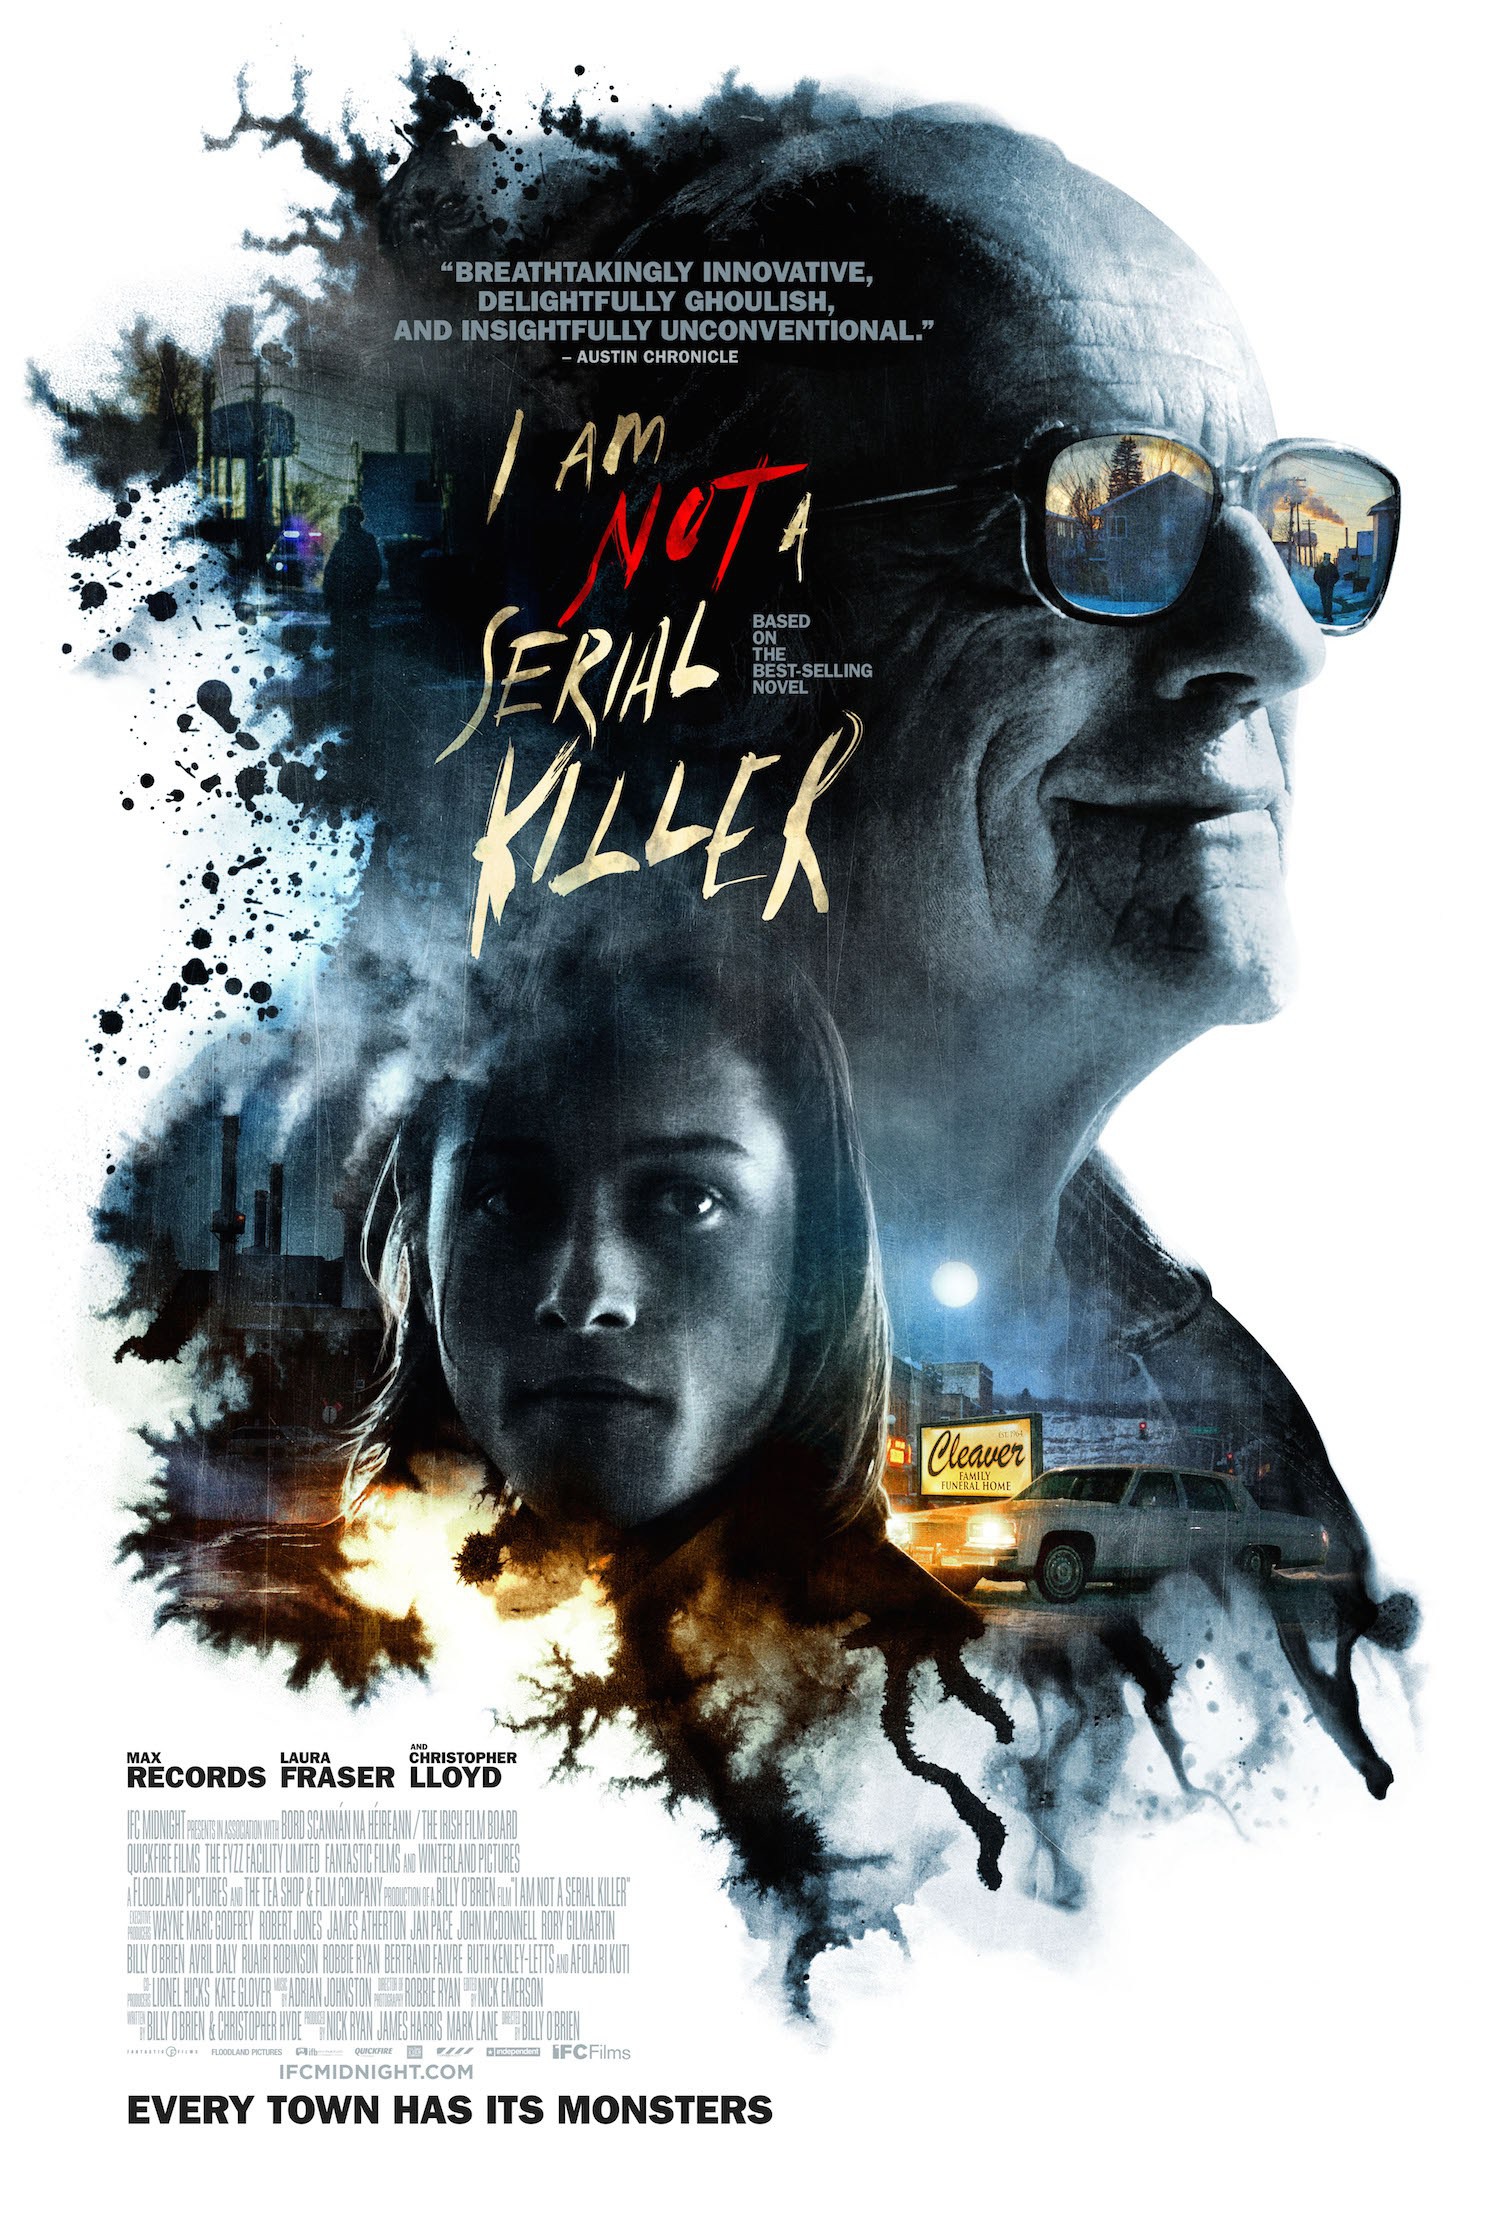 Scannain Talks - I Am Not A Serial Killer with director Billy O'Brien